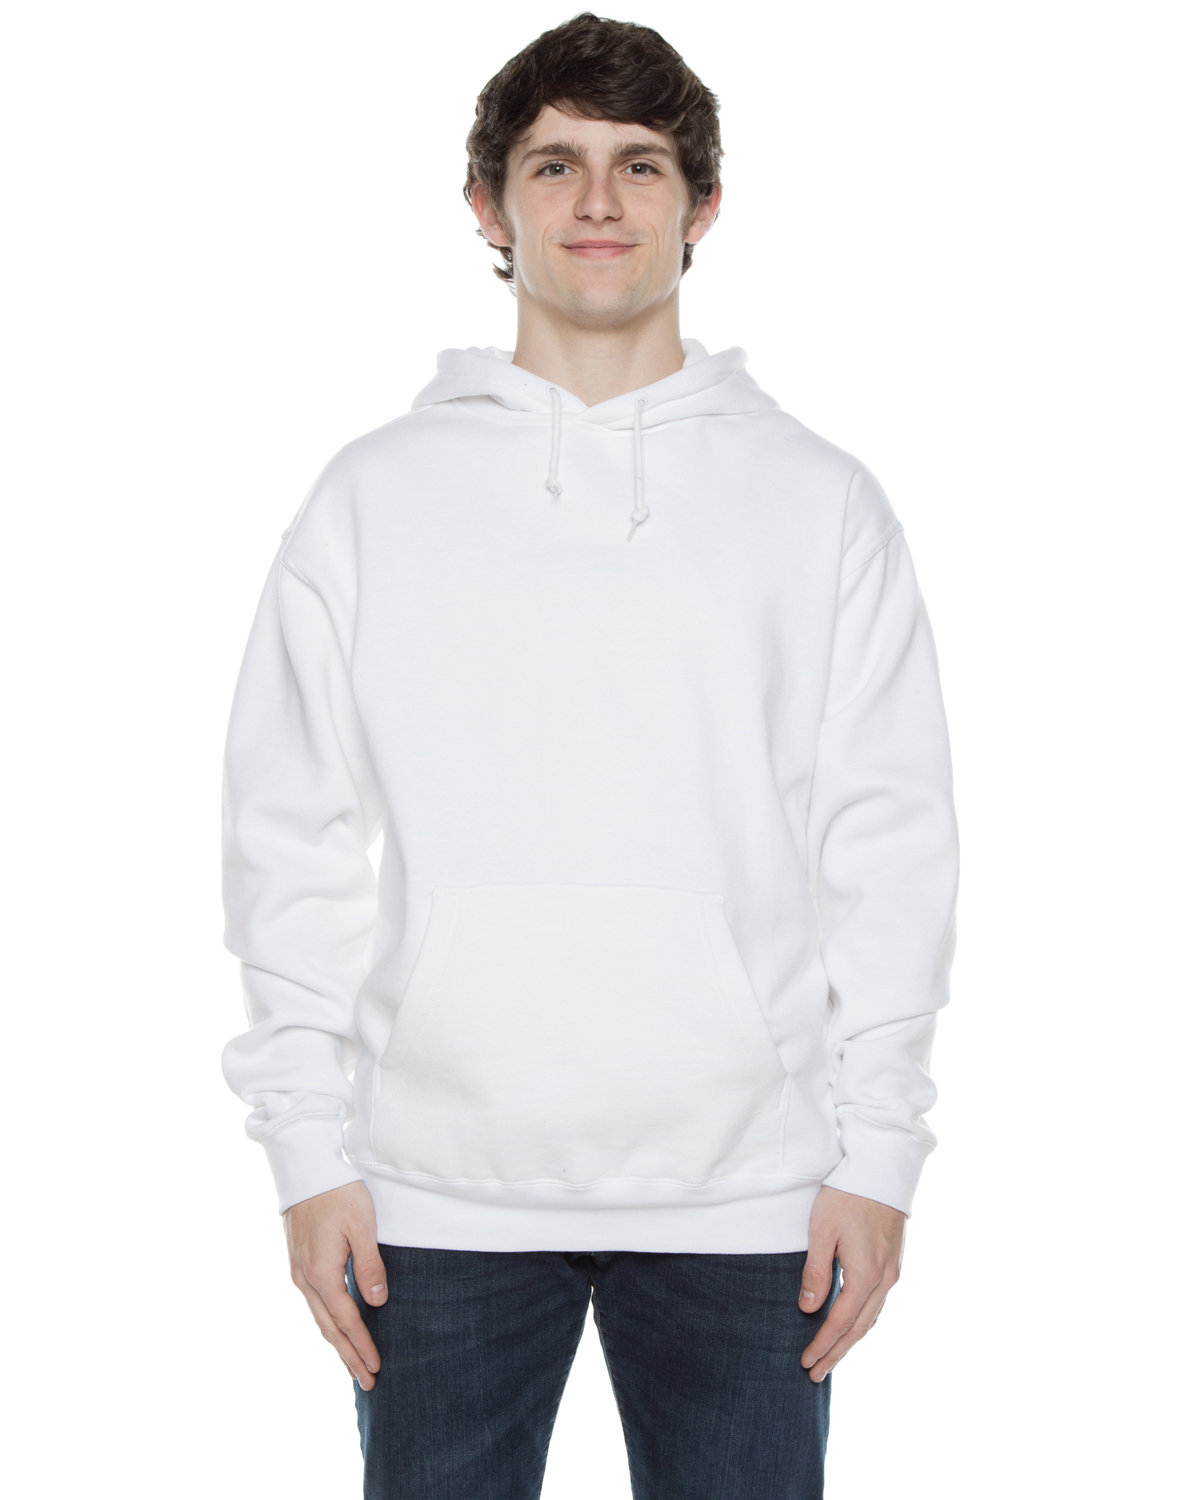 Beimar Drop Ship Unisex 10 oz. 80/20 Cotton/Poly Exclusive Hooded Sweatshirt WHITE 